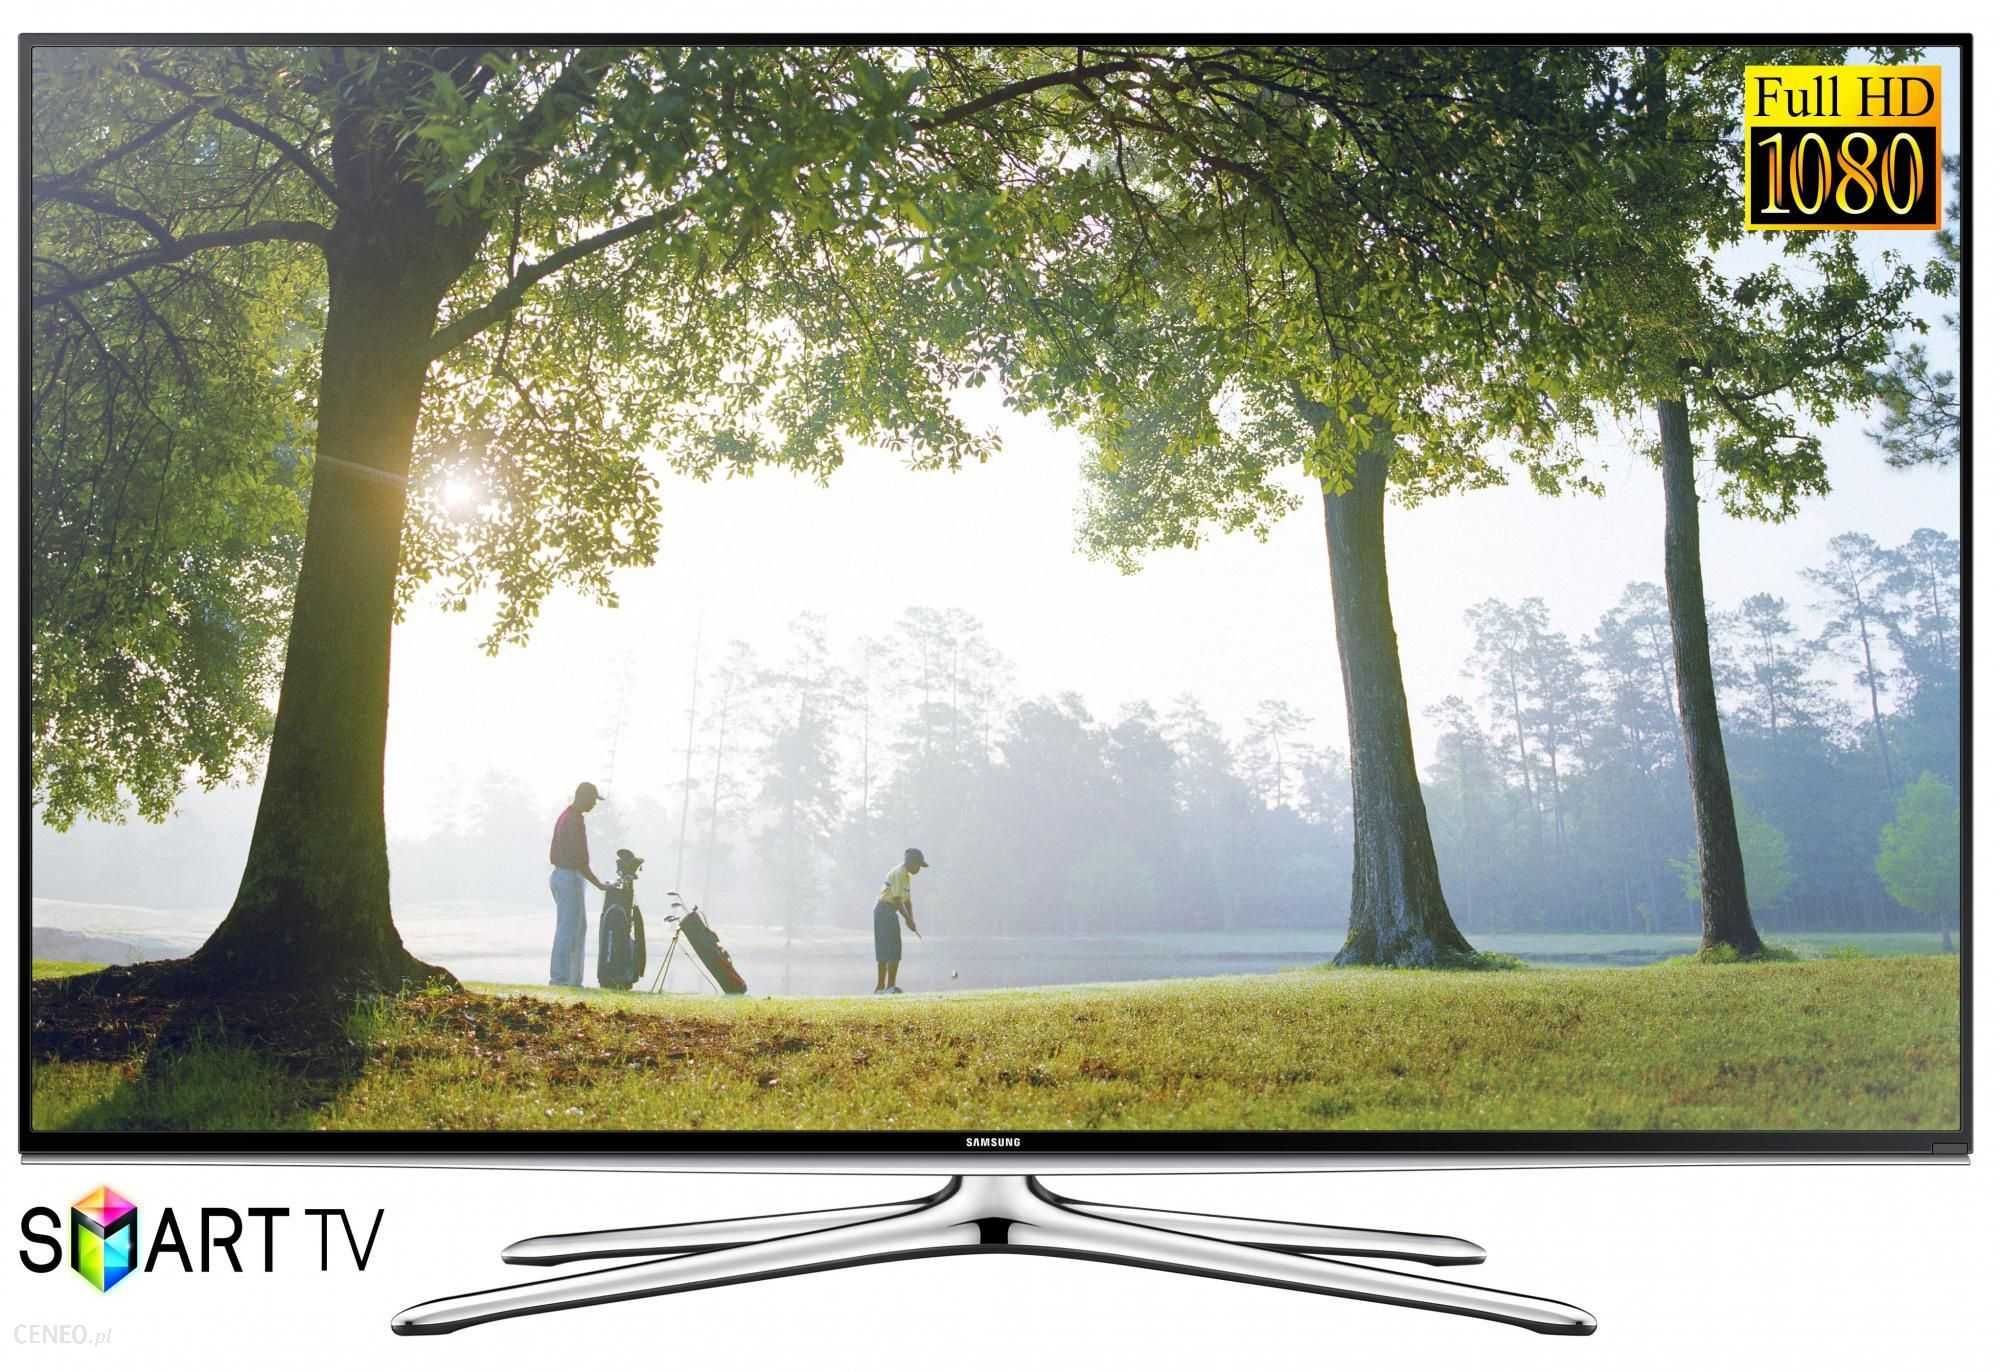 Telewizor Samsung UE46F6510 tv led ultra slim